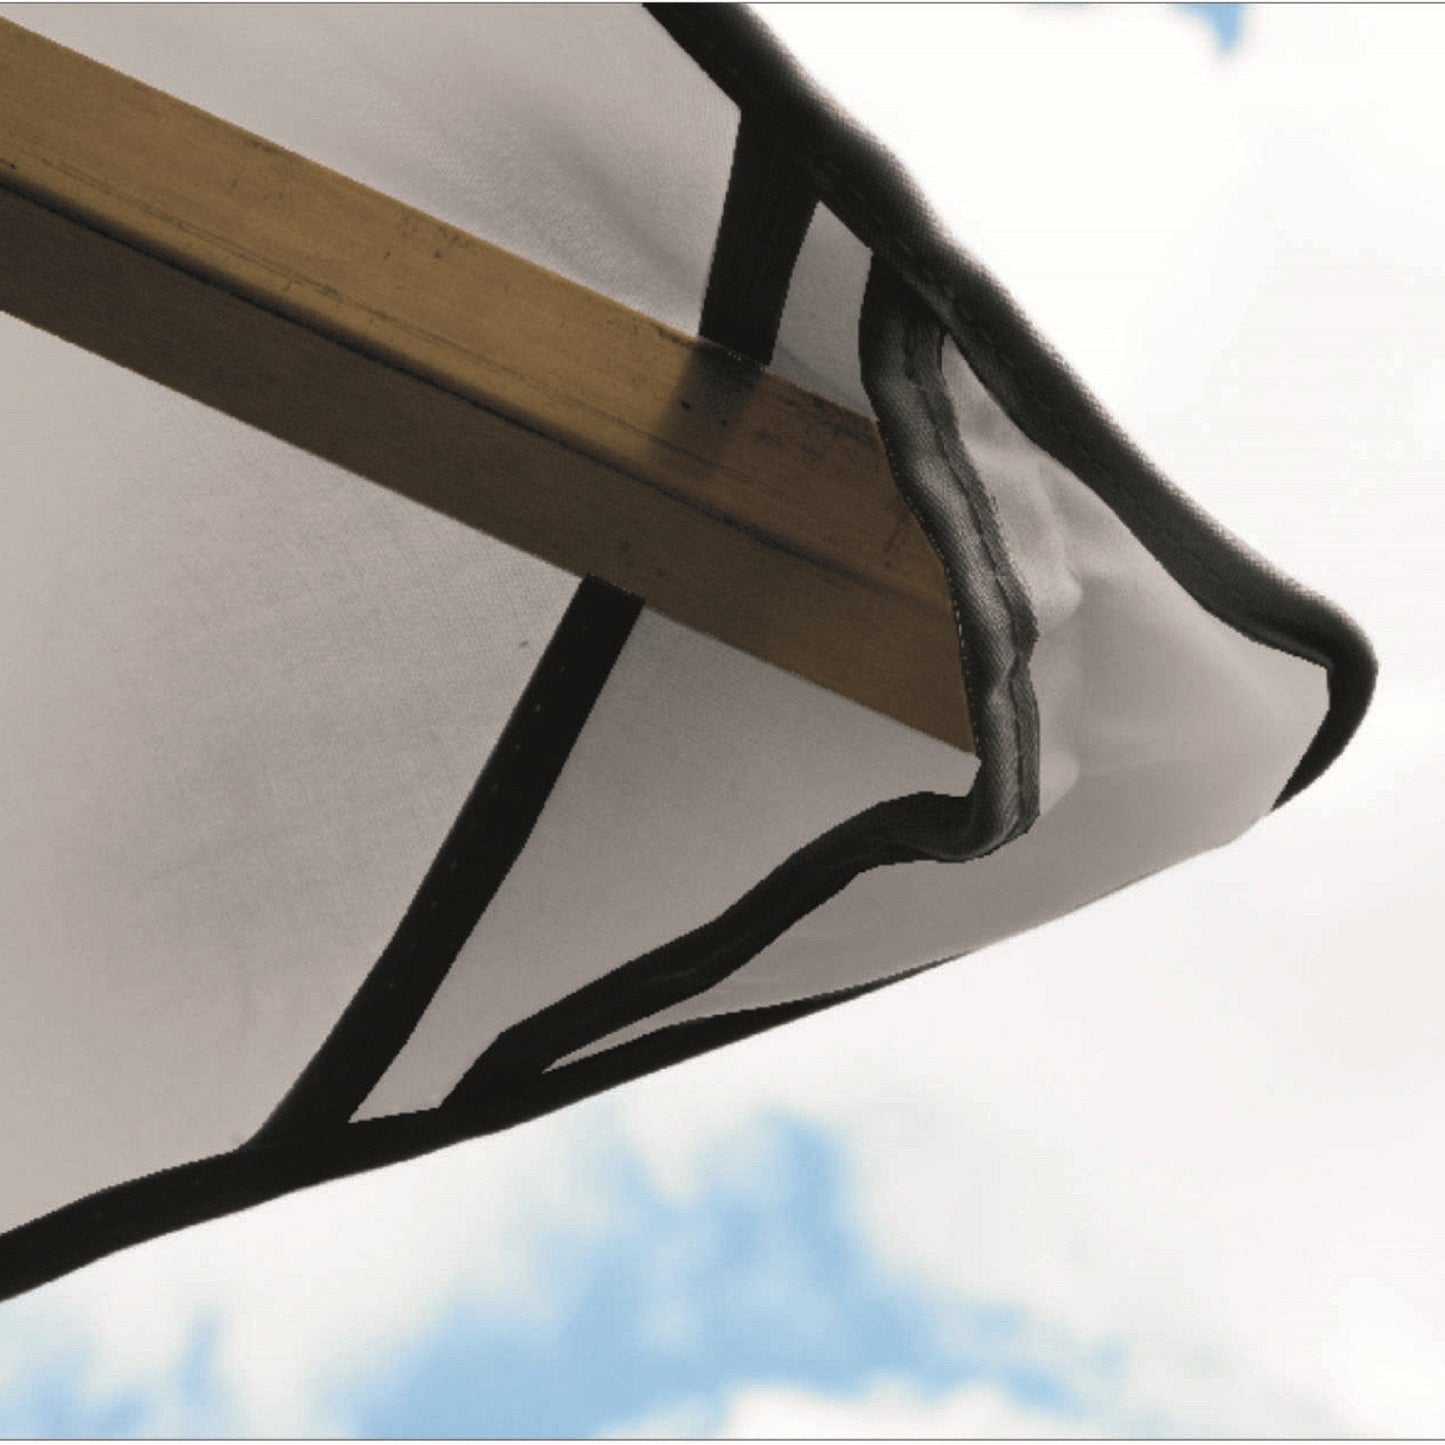 Riverstone | SunDURA Replacement Canopy for 12x12 ft STC SEVILLE, SONOMA, SANTA CRUZ Gazebo